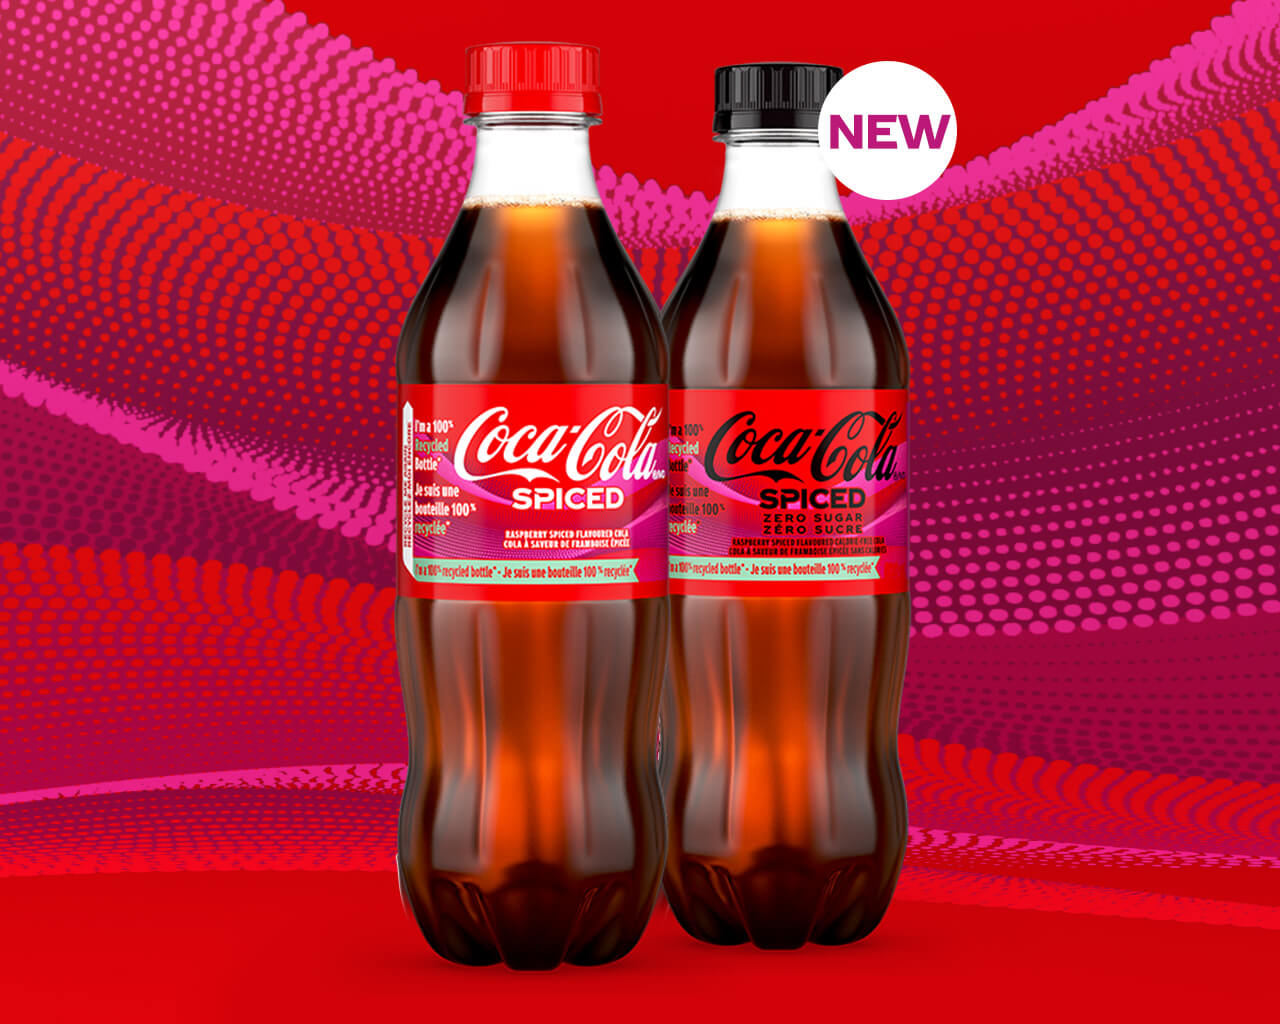 NEW Coca-Cola Spiced